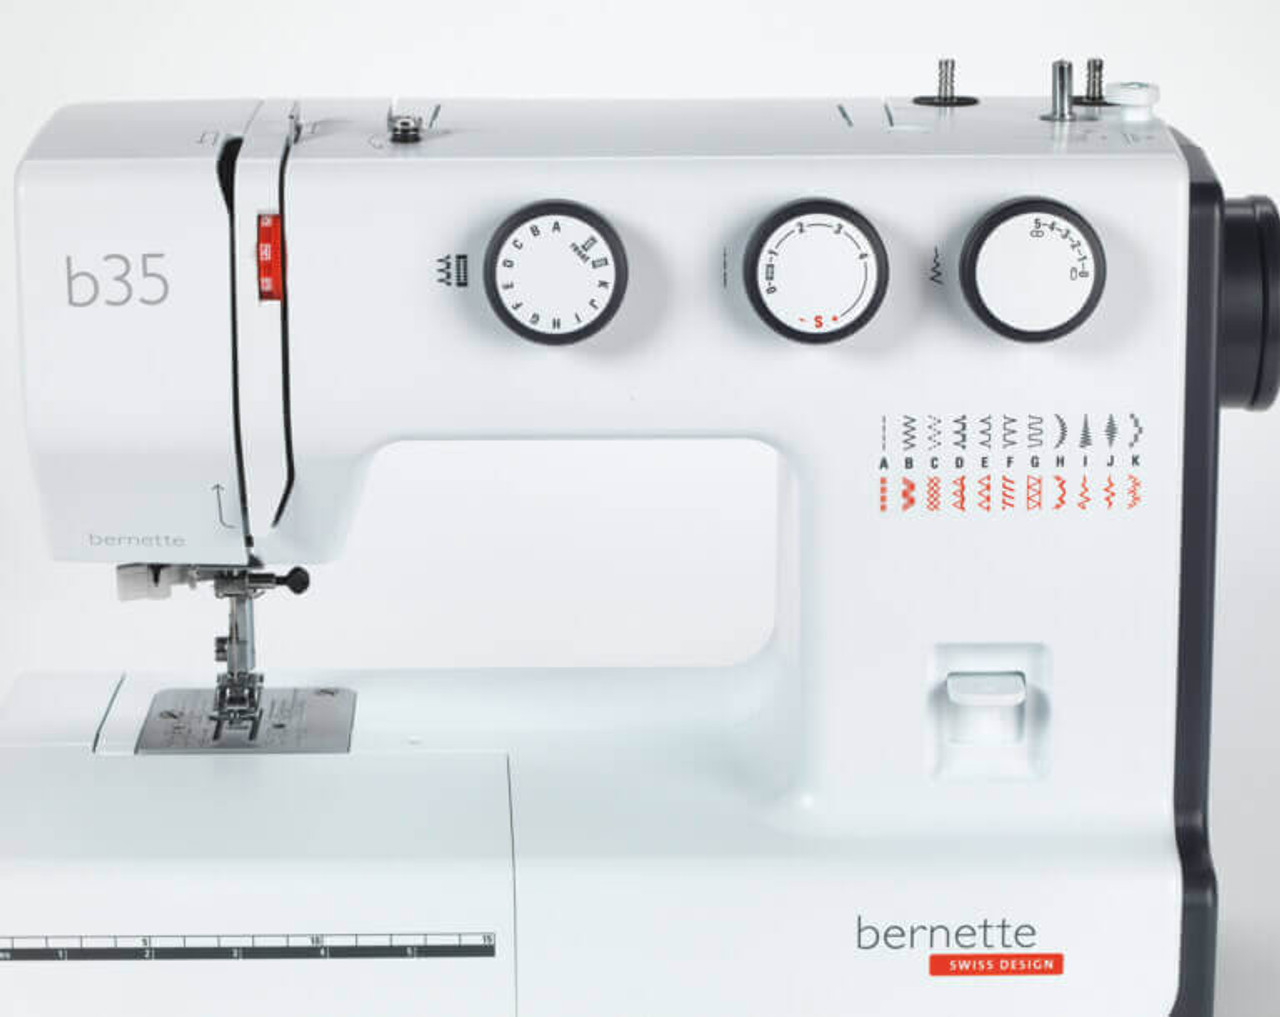 Bernette 35 Swiss Design Sewing Machine